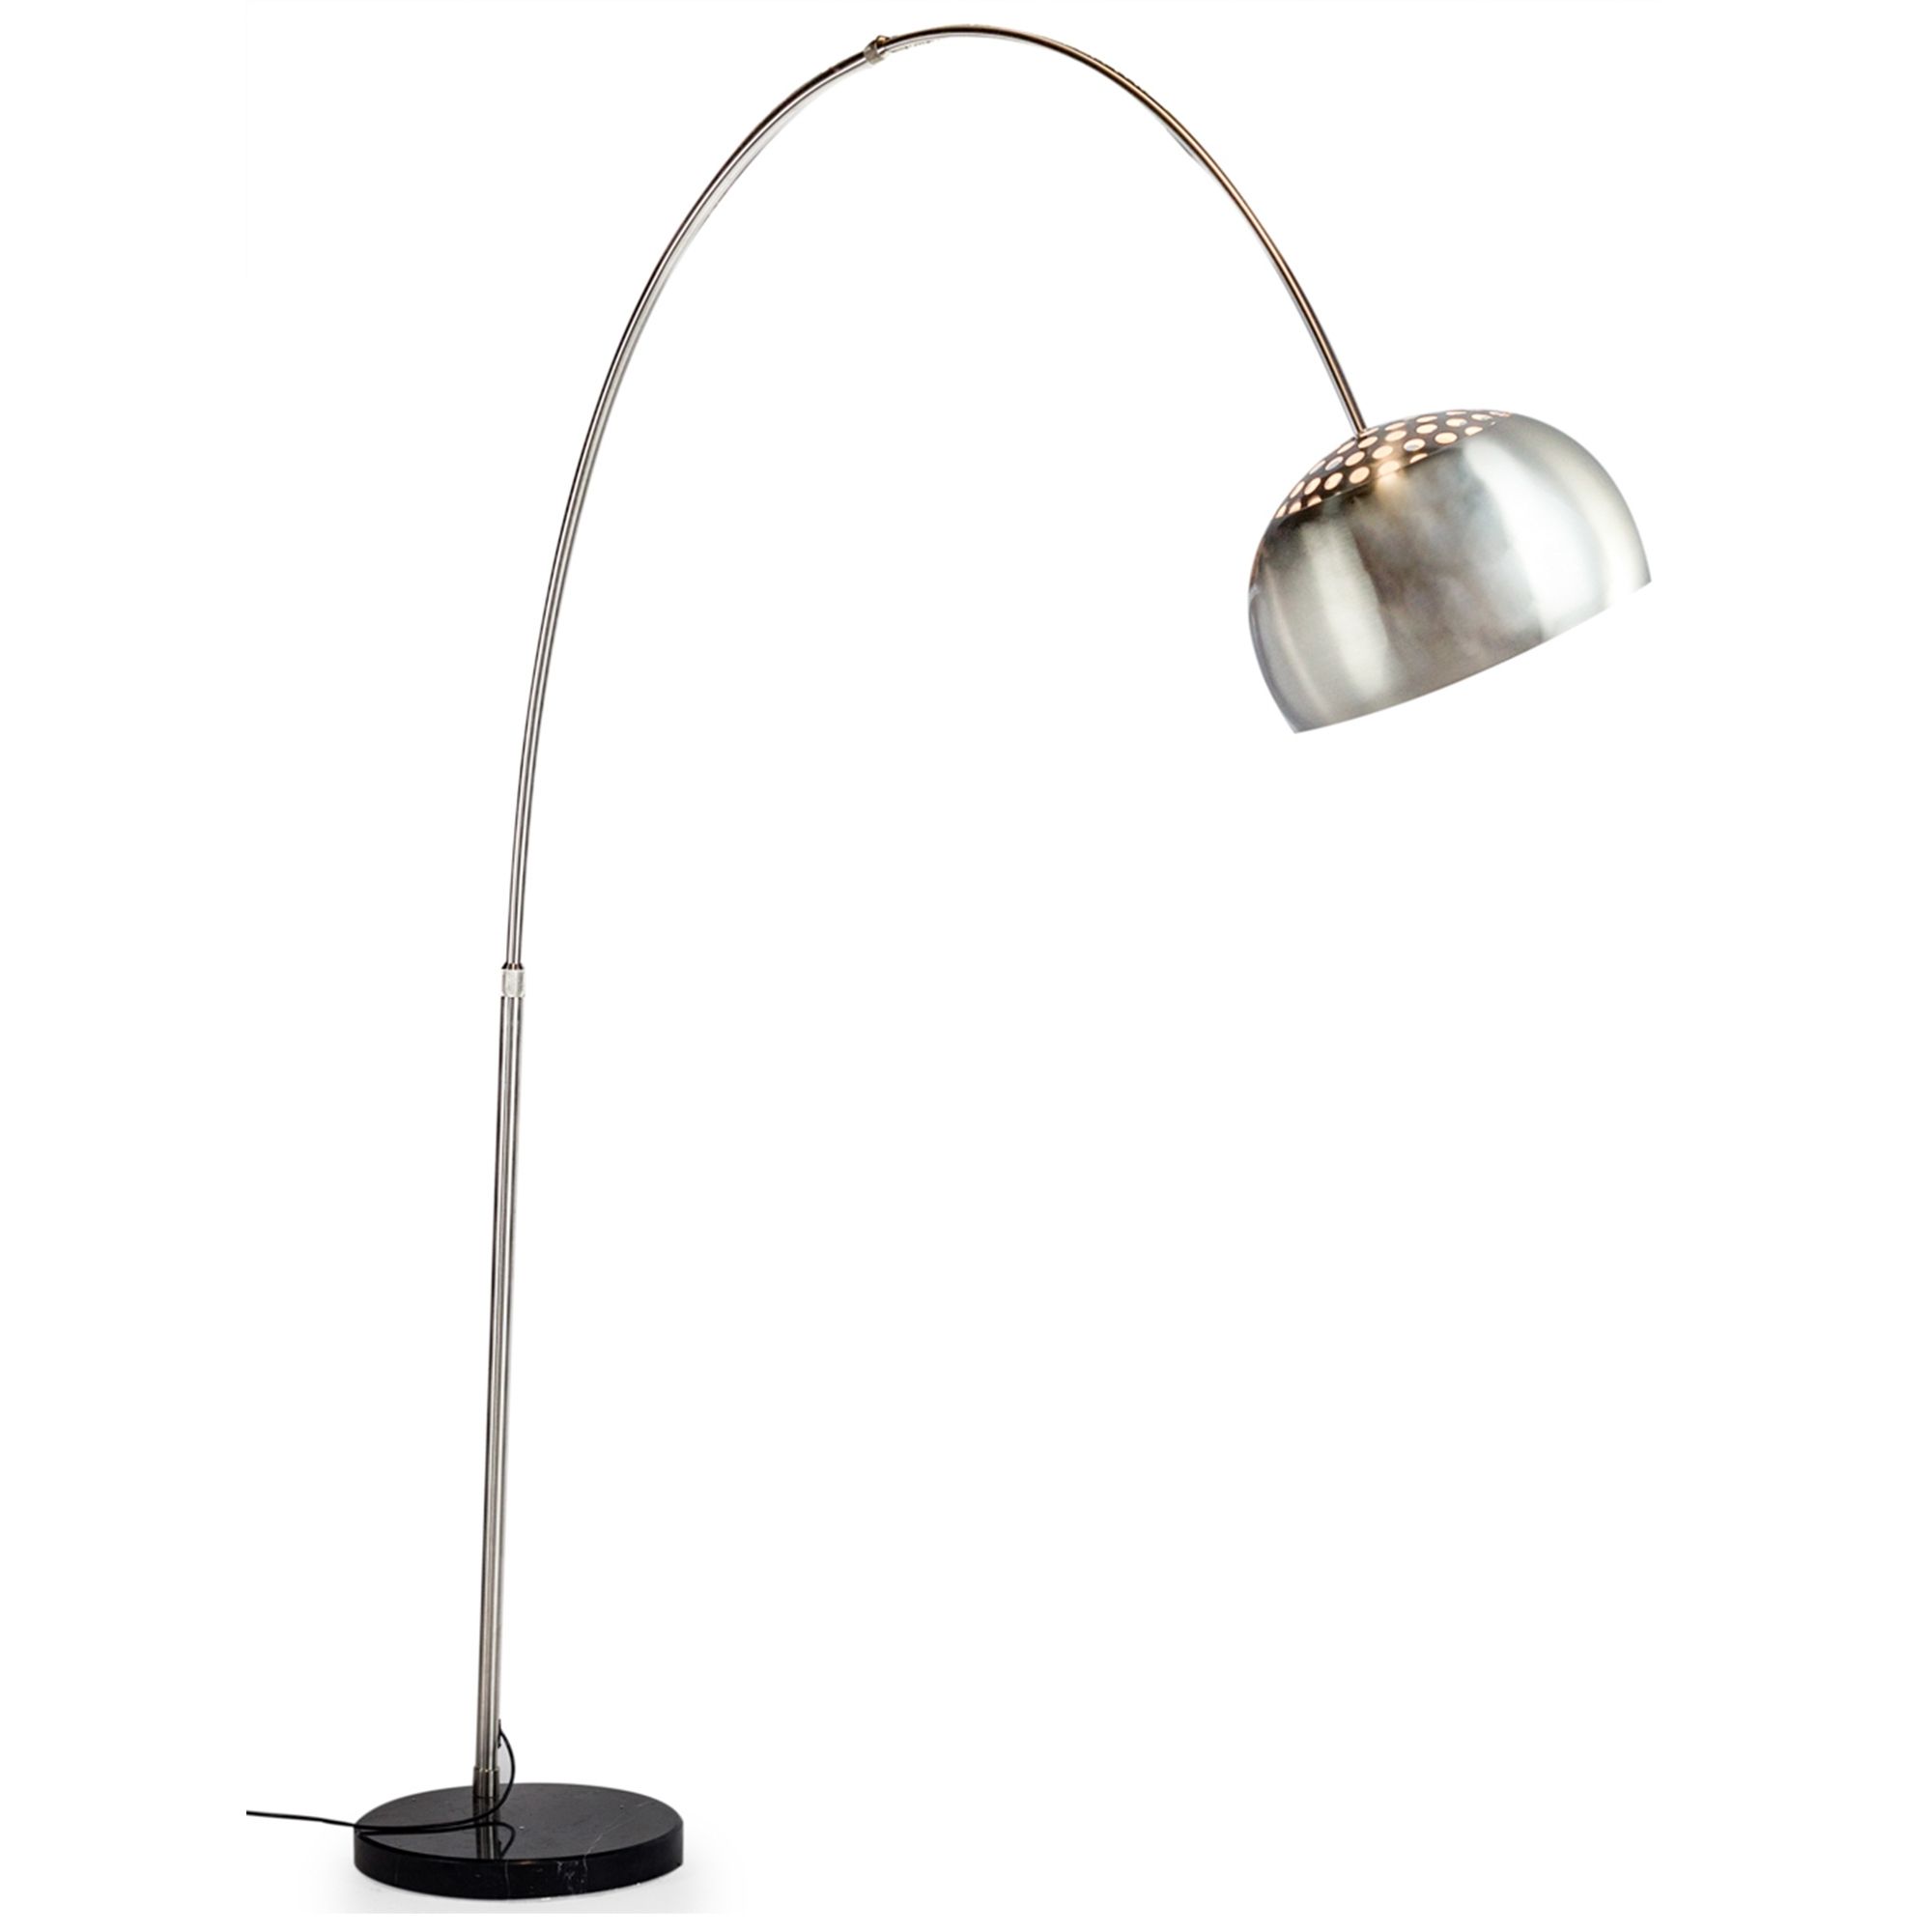 Homesdirect365 With Regard To Steel Floor Lamps (View 6 of 15)